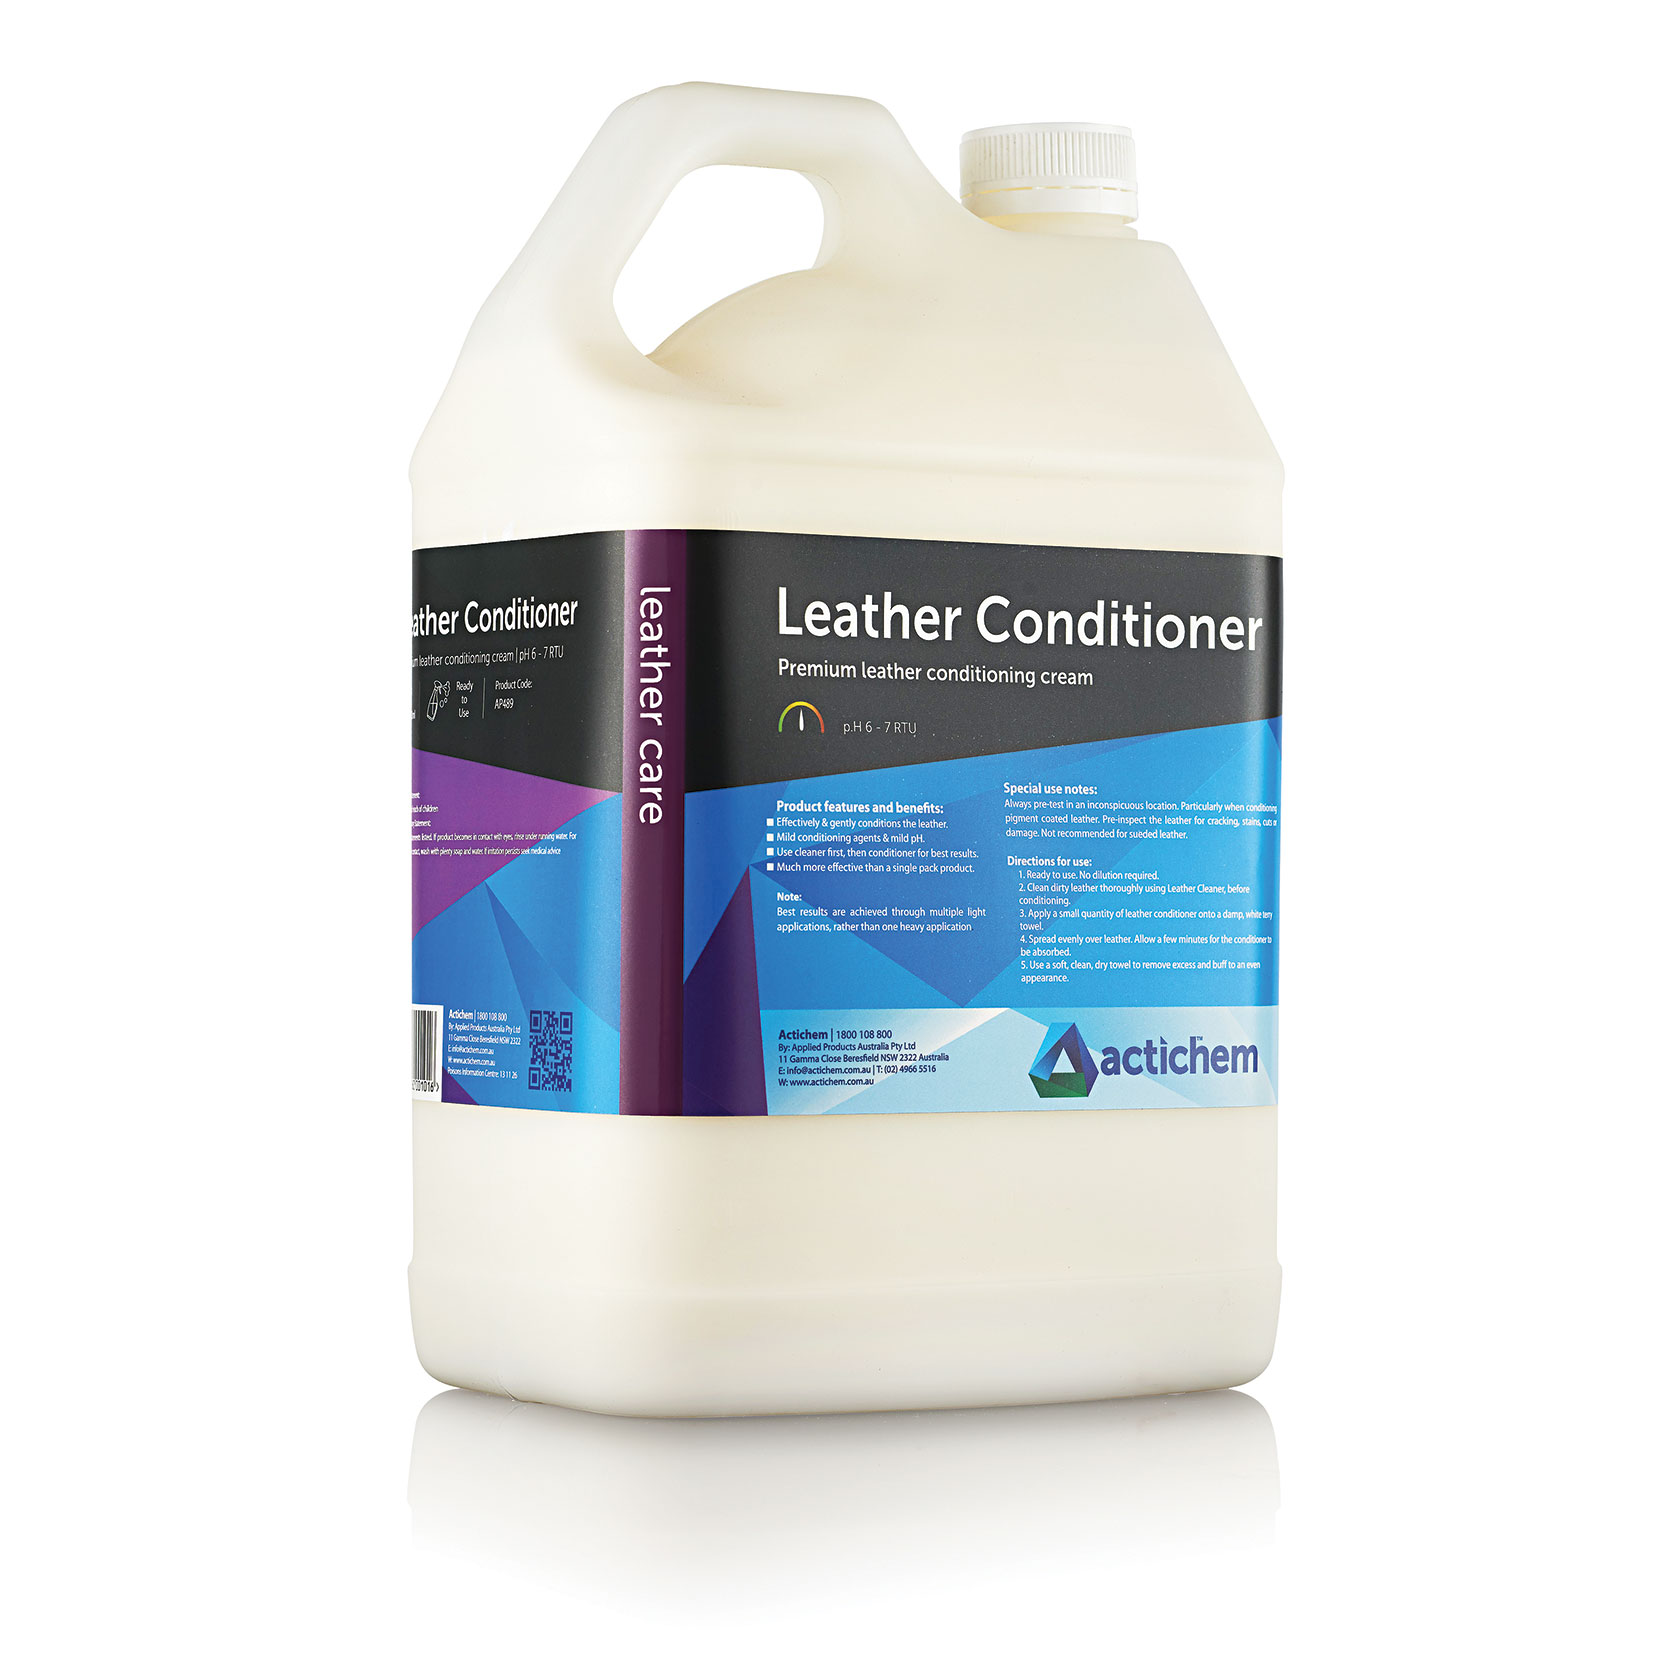 Actichem Leather Conditioner Leather conditioning cream